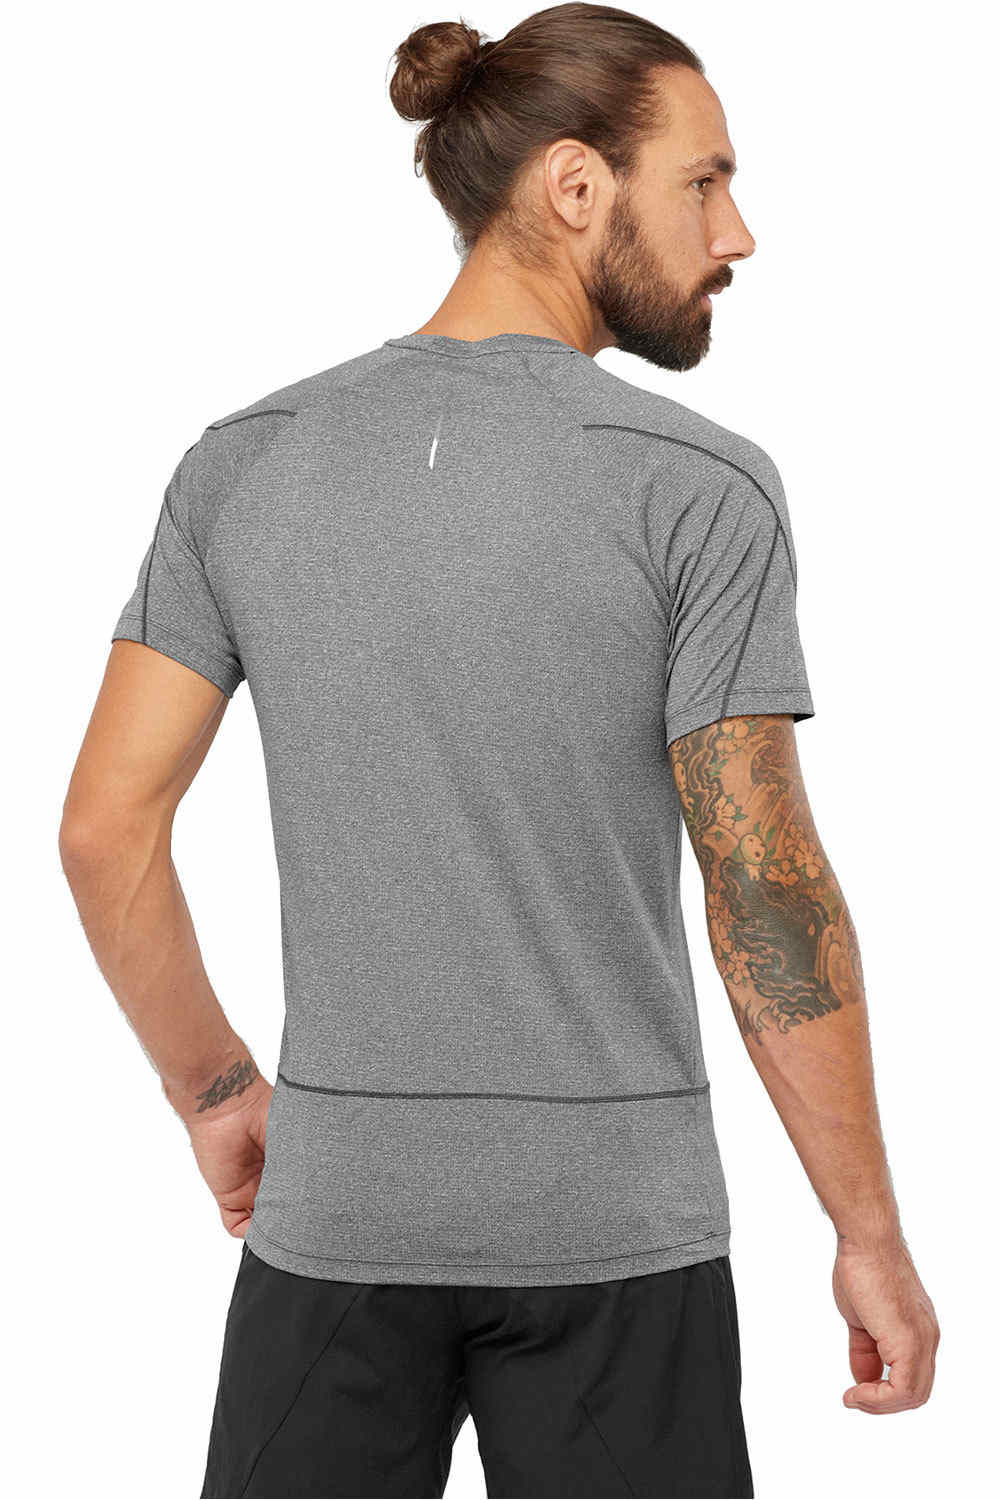 Comprar en oferta Salomon Cross Run M T-Shirt (LC2050) deep black/heather